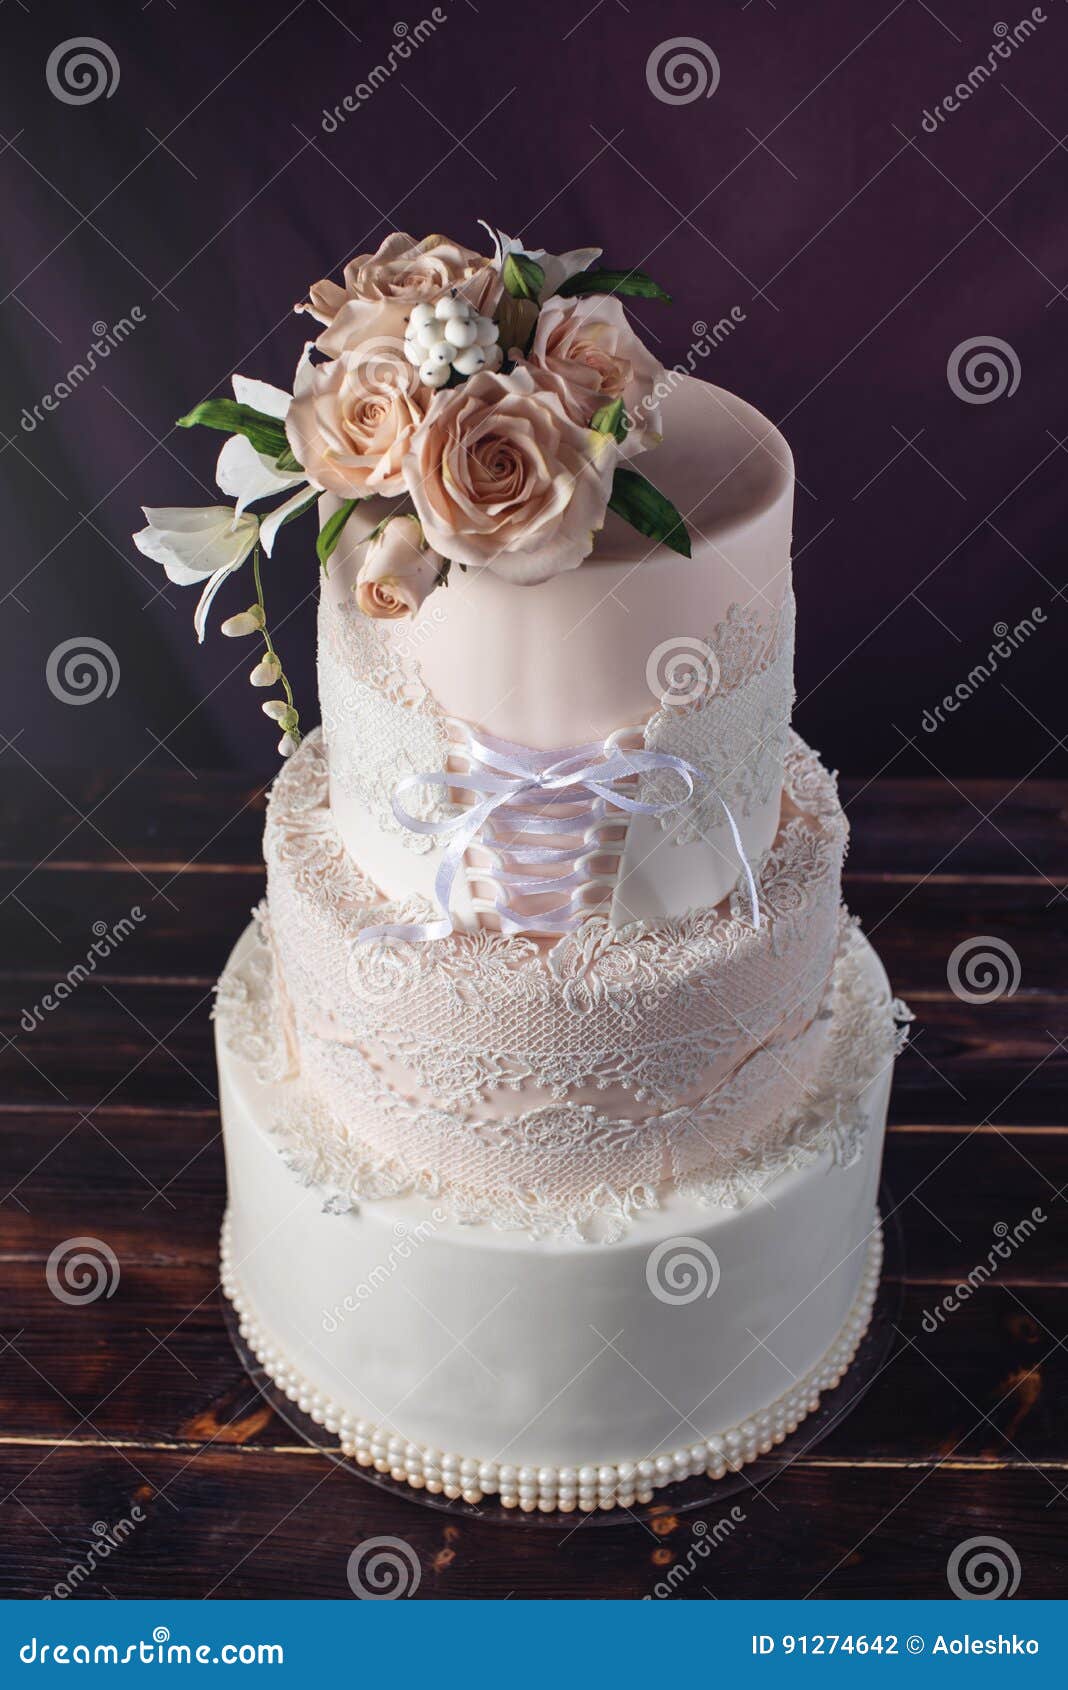 Trending: Matching Wedding Cake Design to Your Dress - Blog @ Cafe Pierrot